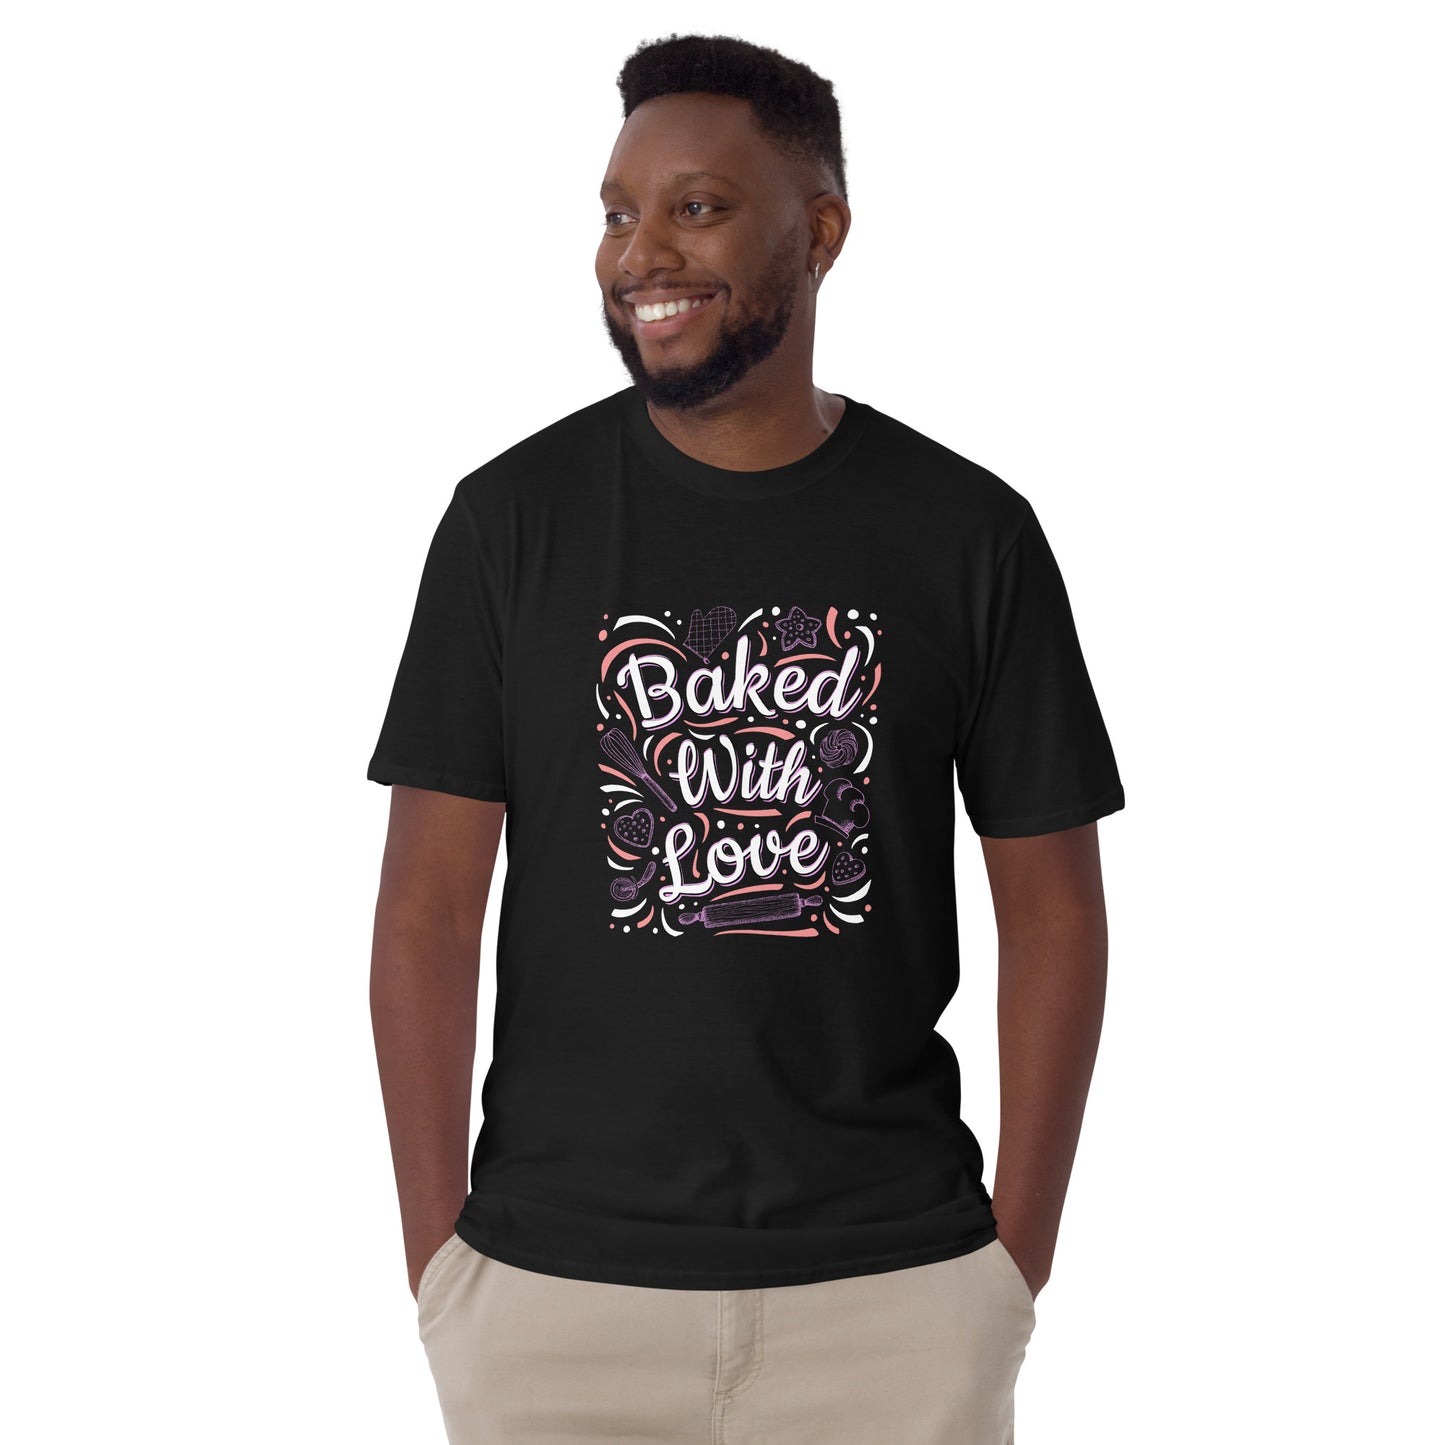 Baked with love - Short-Sleeve Unisex T-Shirt - HobbyMeFree